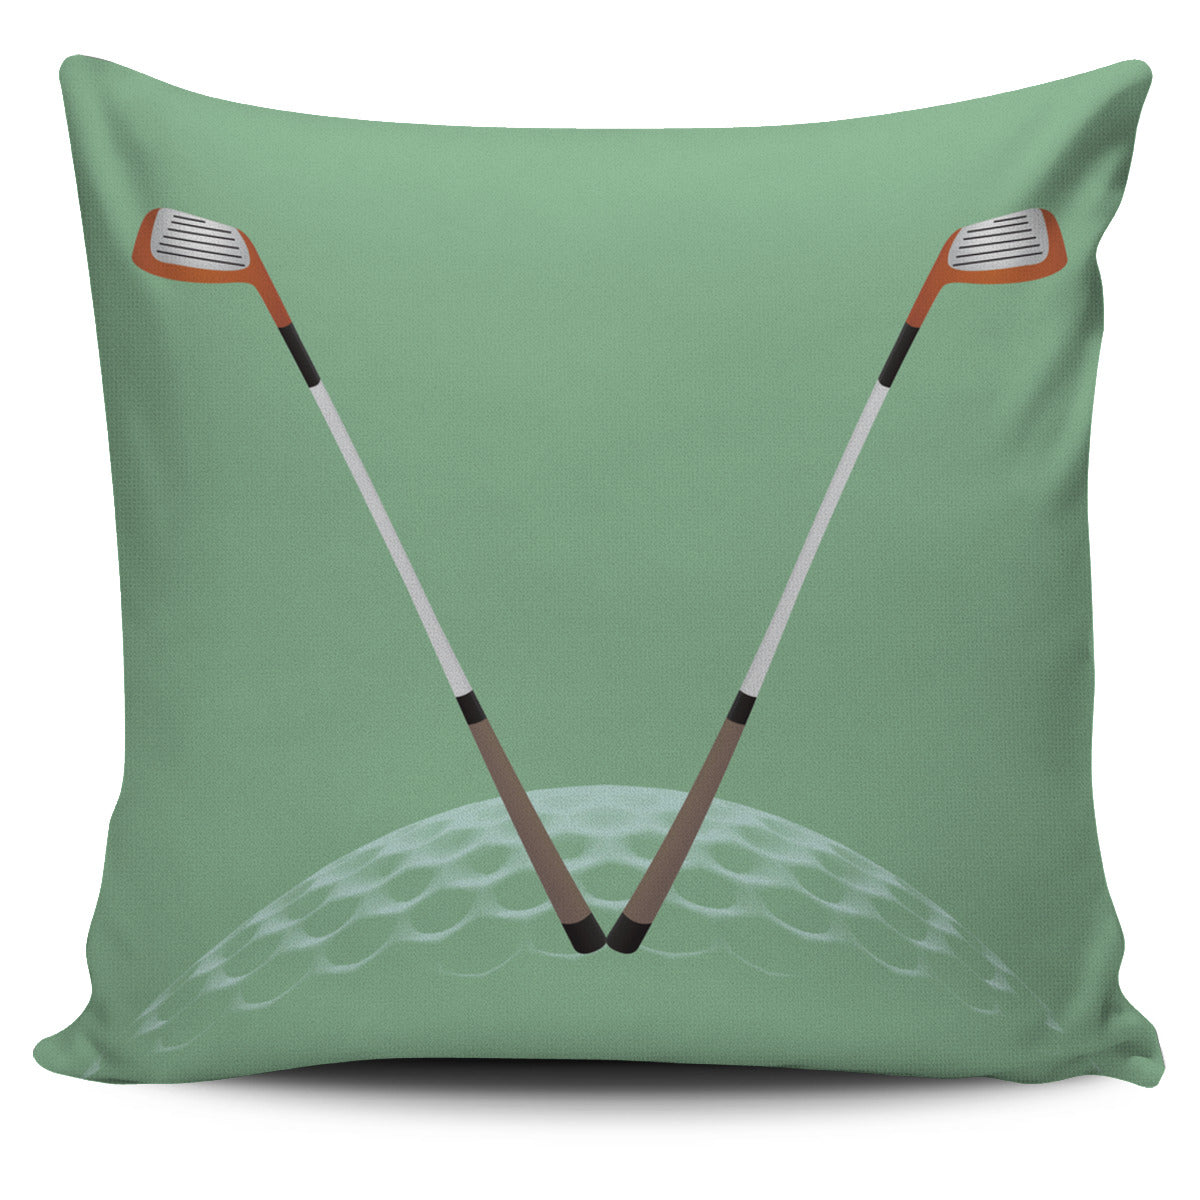 Golf Clubs Pillow Cover